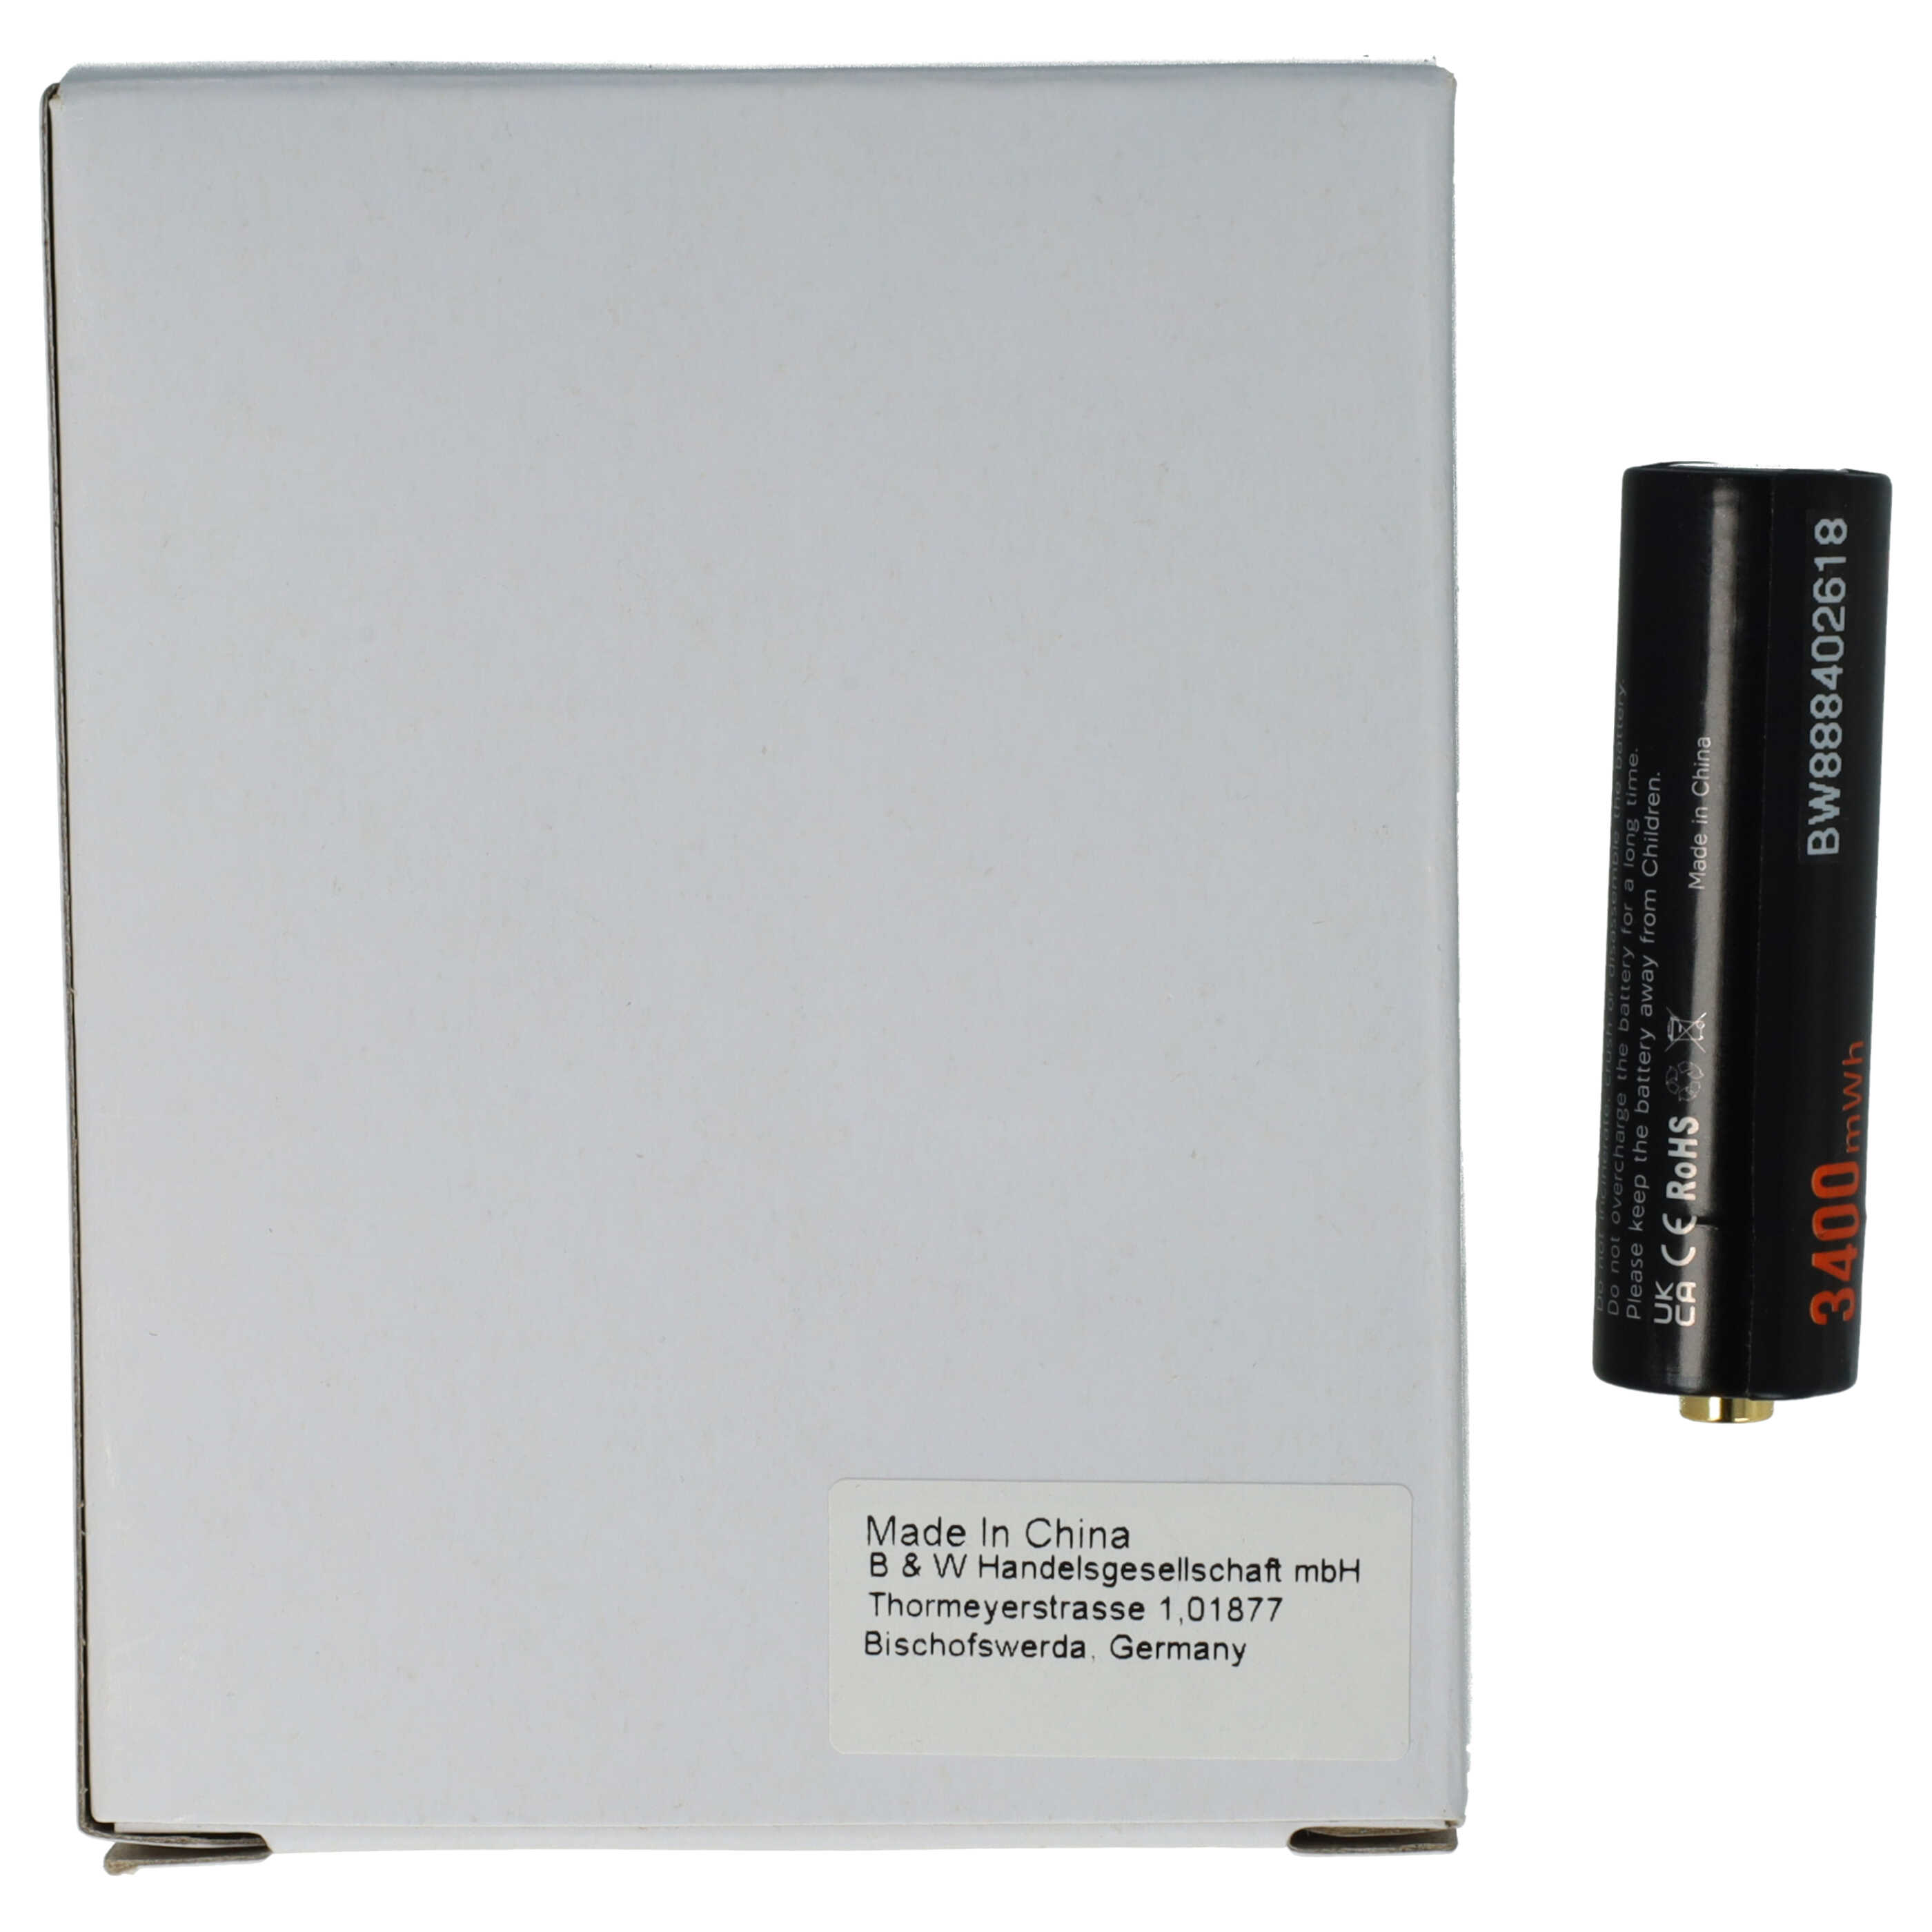 AA Mignon Batterie - 920mAh 3,7V Li-Ion